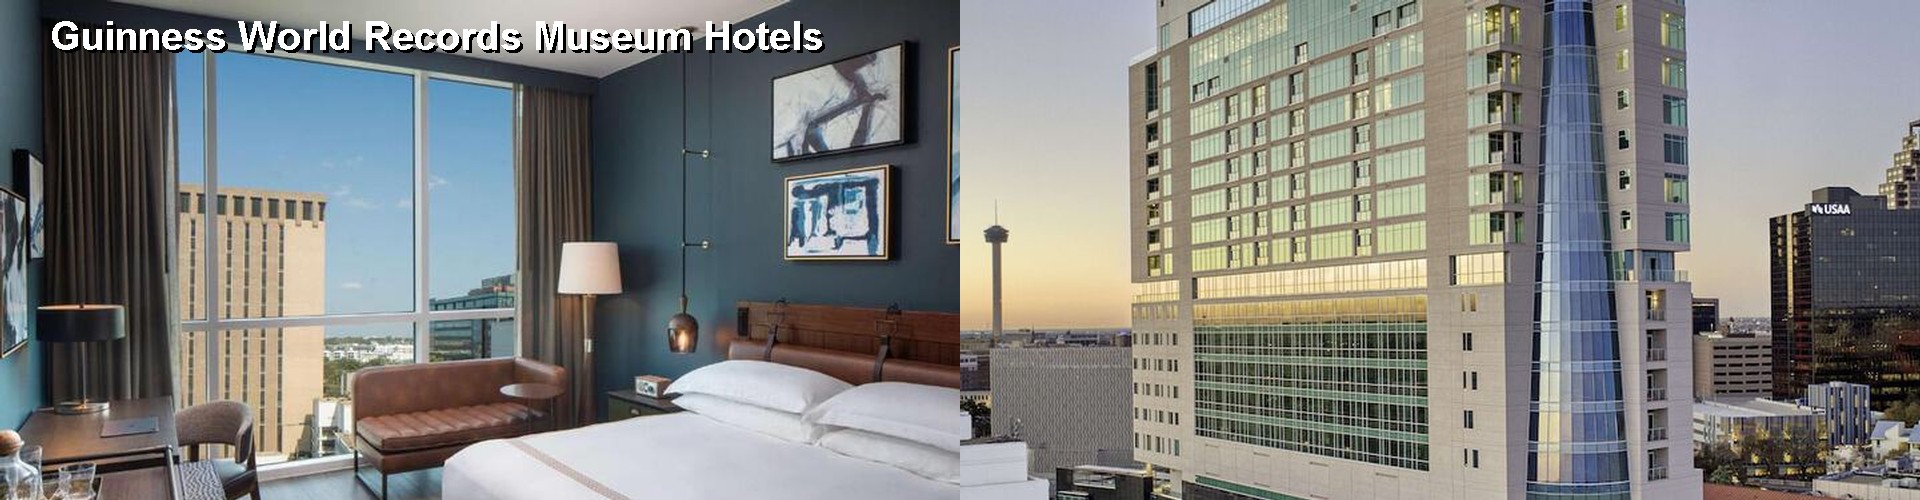 5 Best Hotels near Guinness World Records Museum